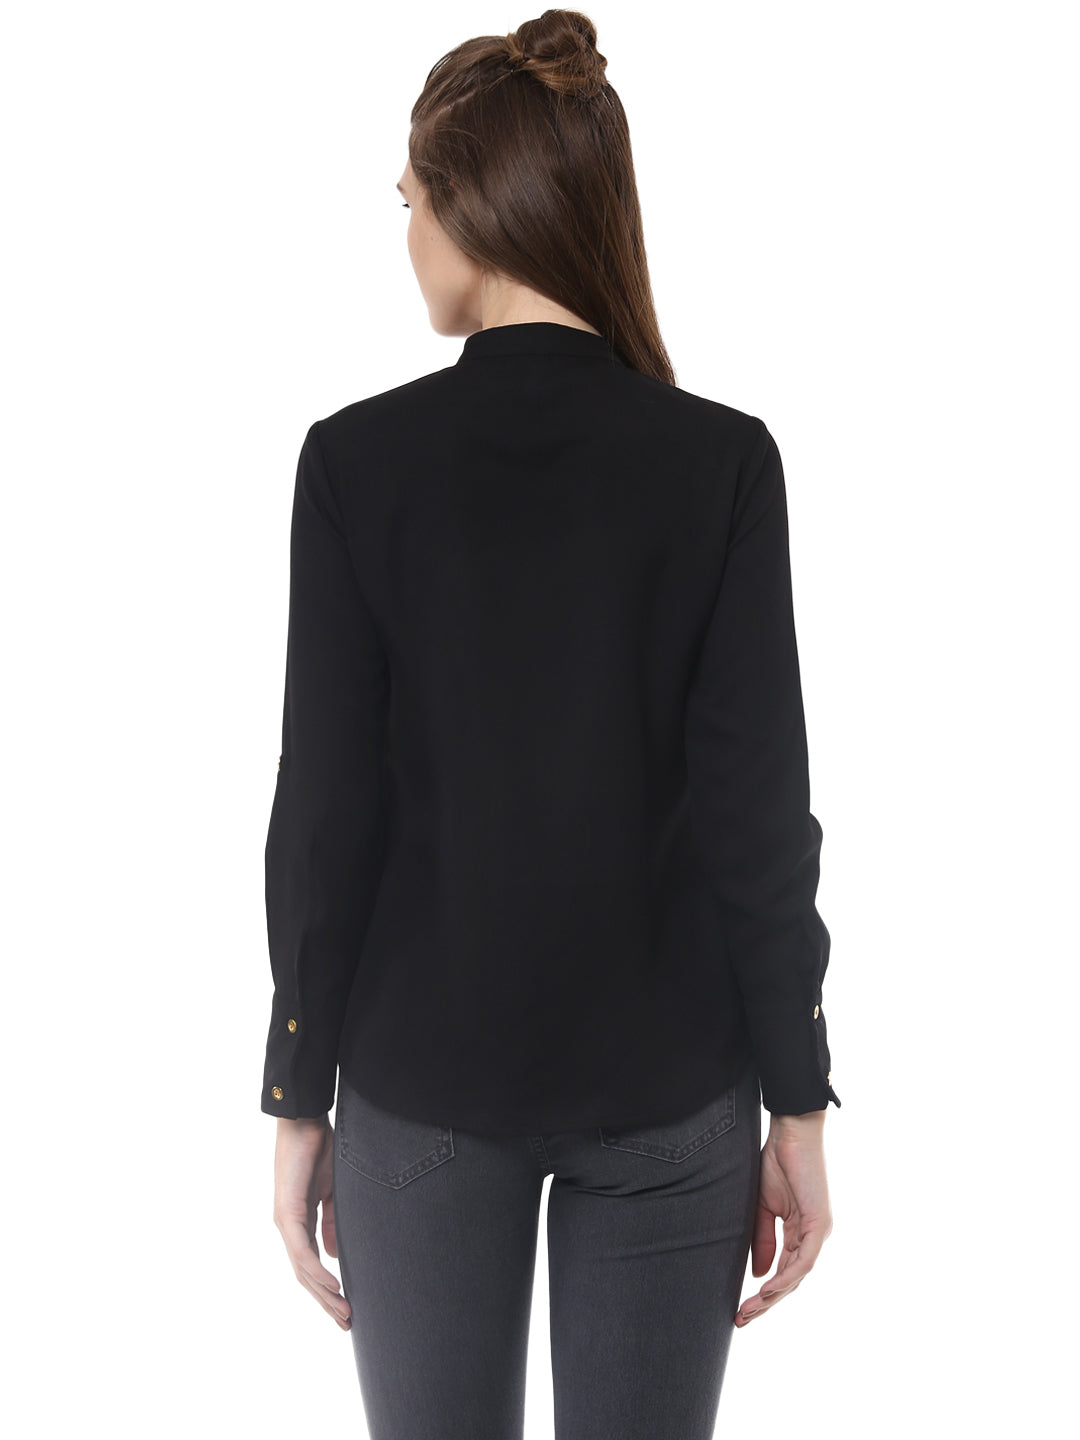 Women's Black Polyester Ruffle Top - StyleStone